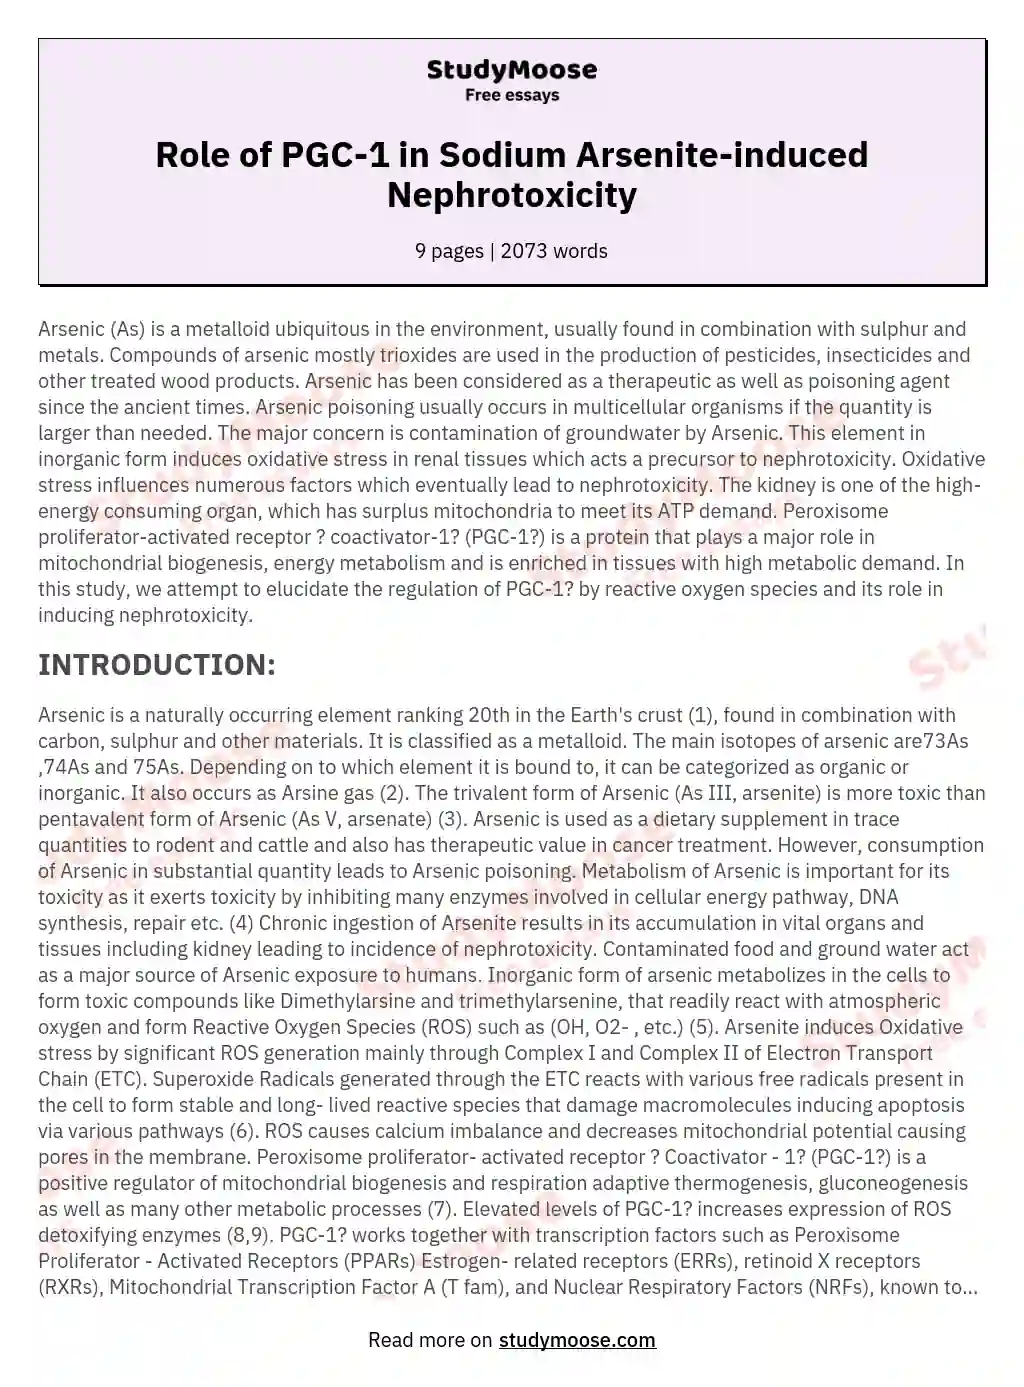 Role of PGC-1 in Sodium Arsenite-induced Nephrotoxicity essay